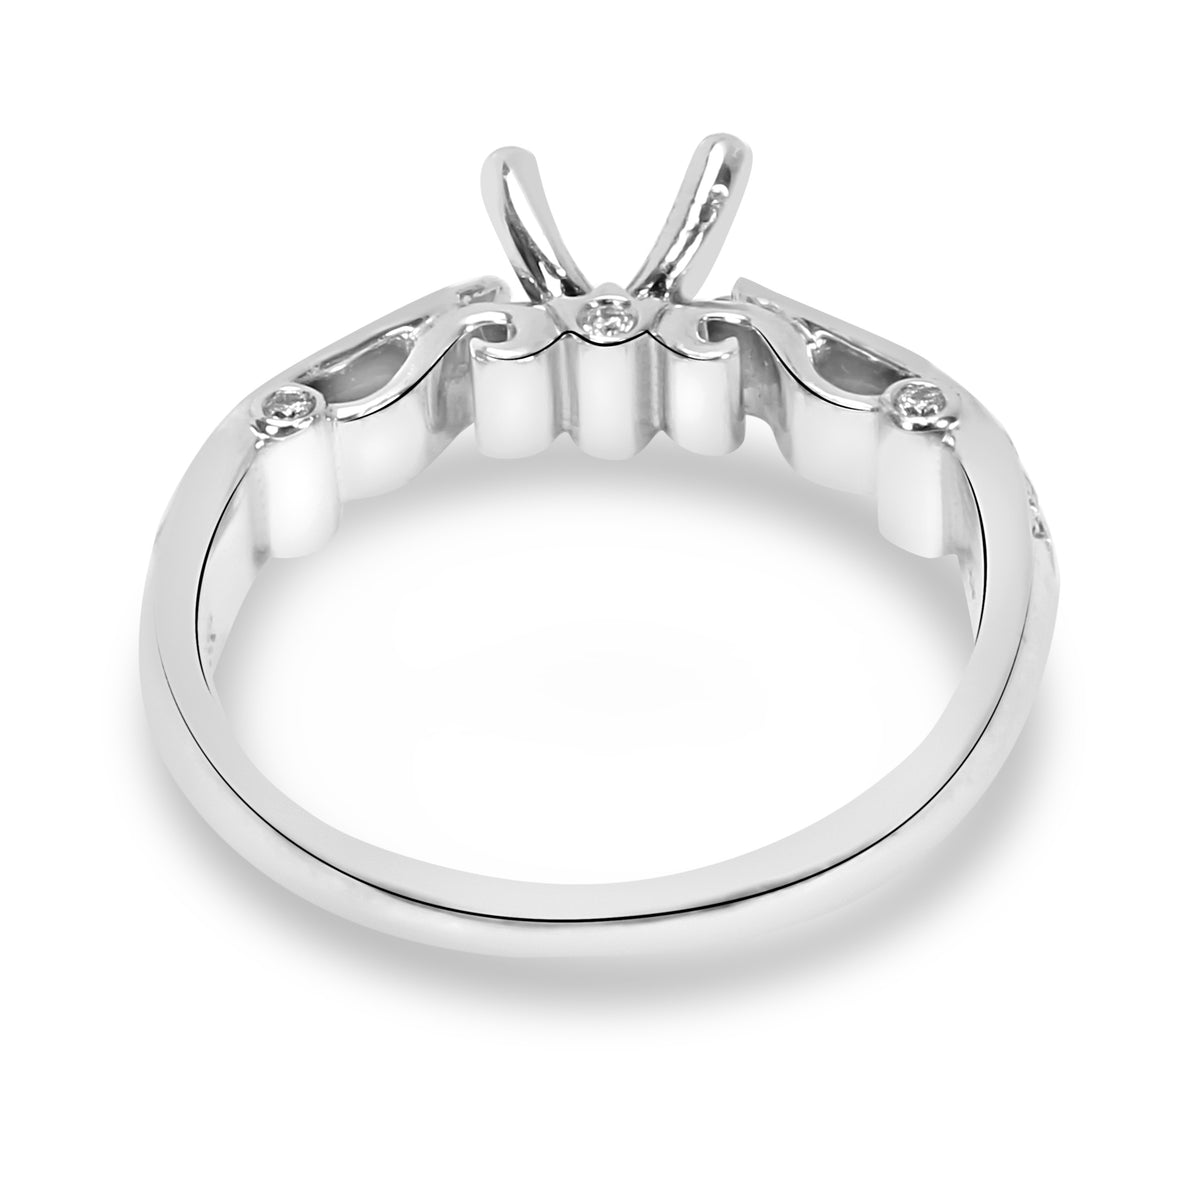 Verragio Diamond Engagement Ring Setting in 18K White Gold